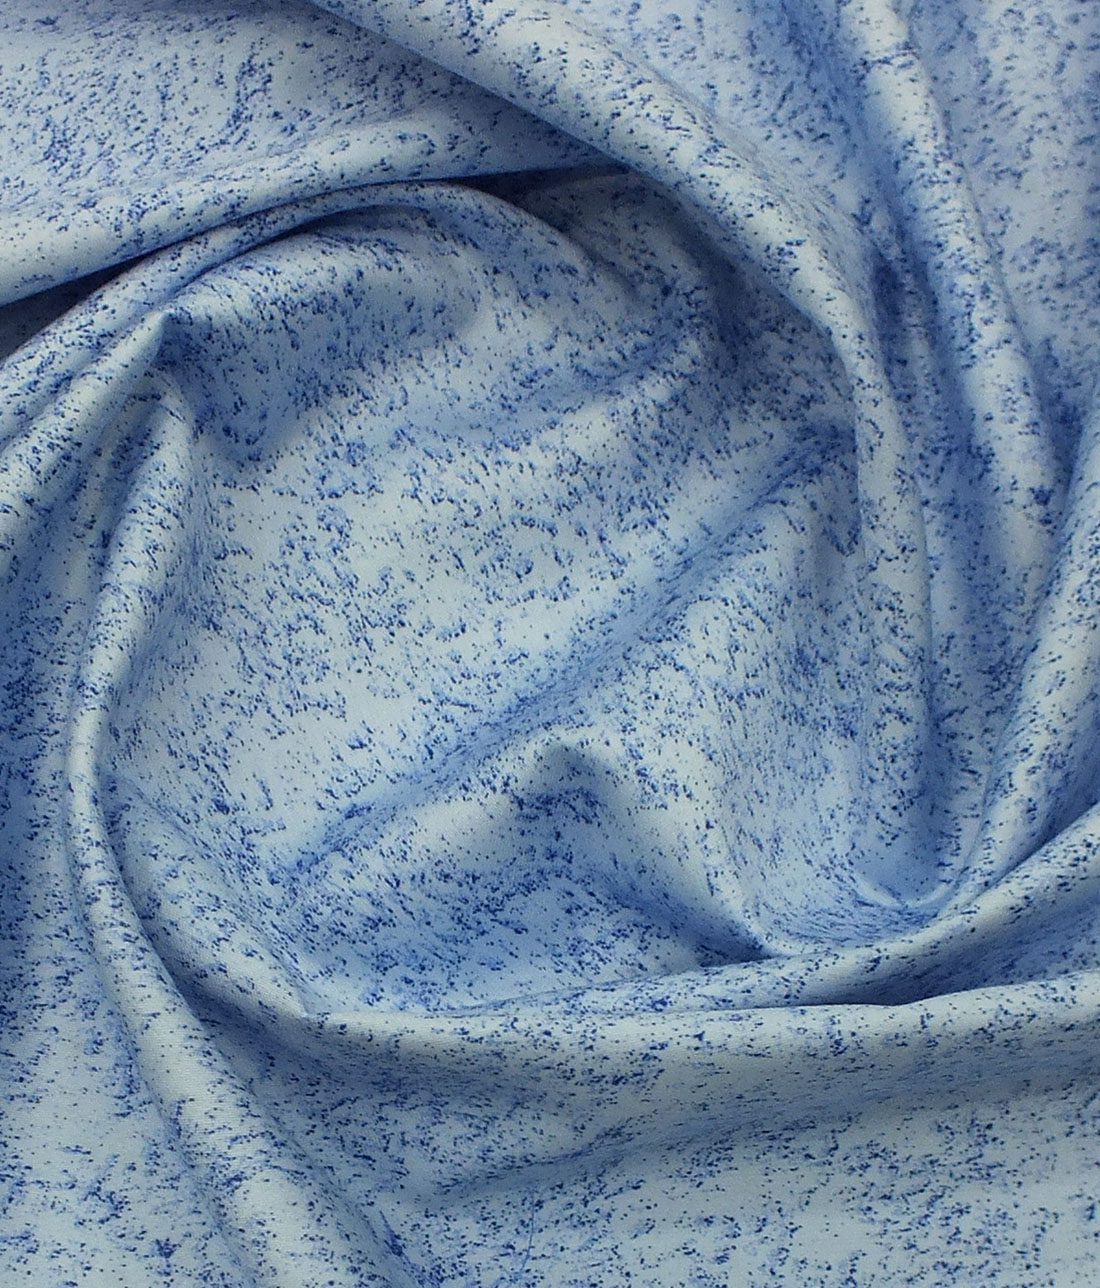 Cadini by Siyaram's Men's Skyblue Spray Cotton Printed Shirt Fabric